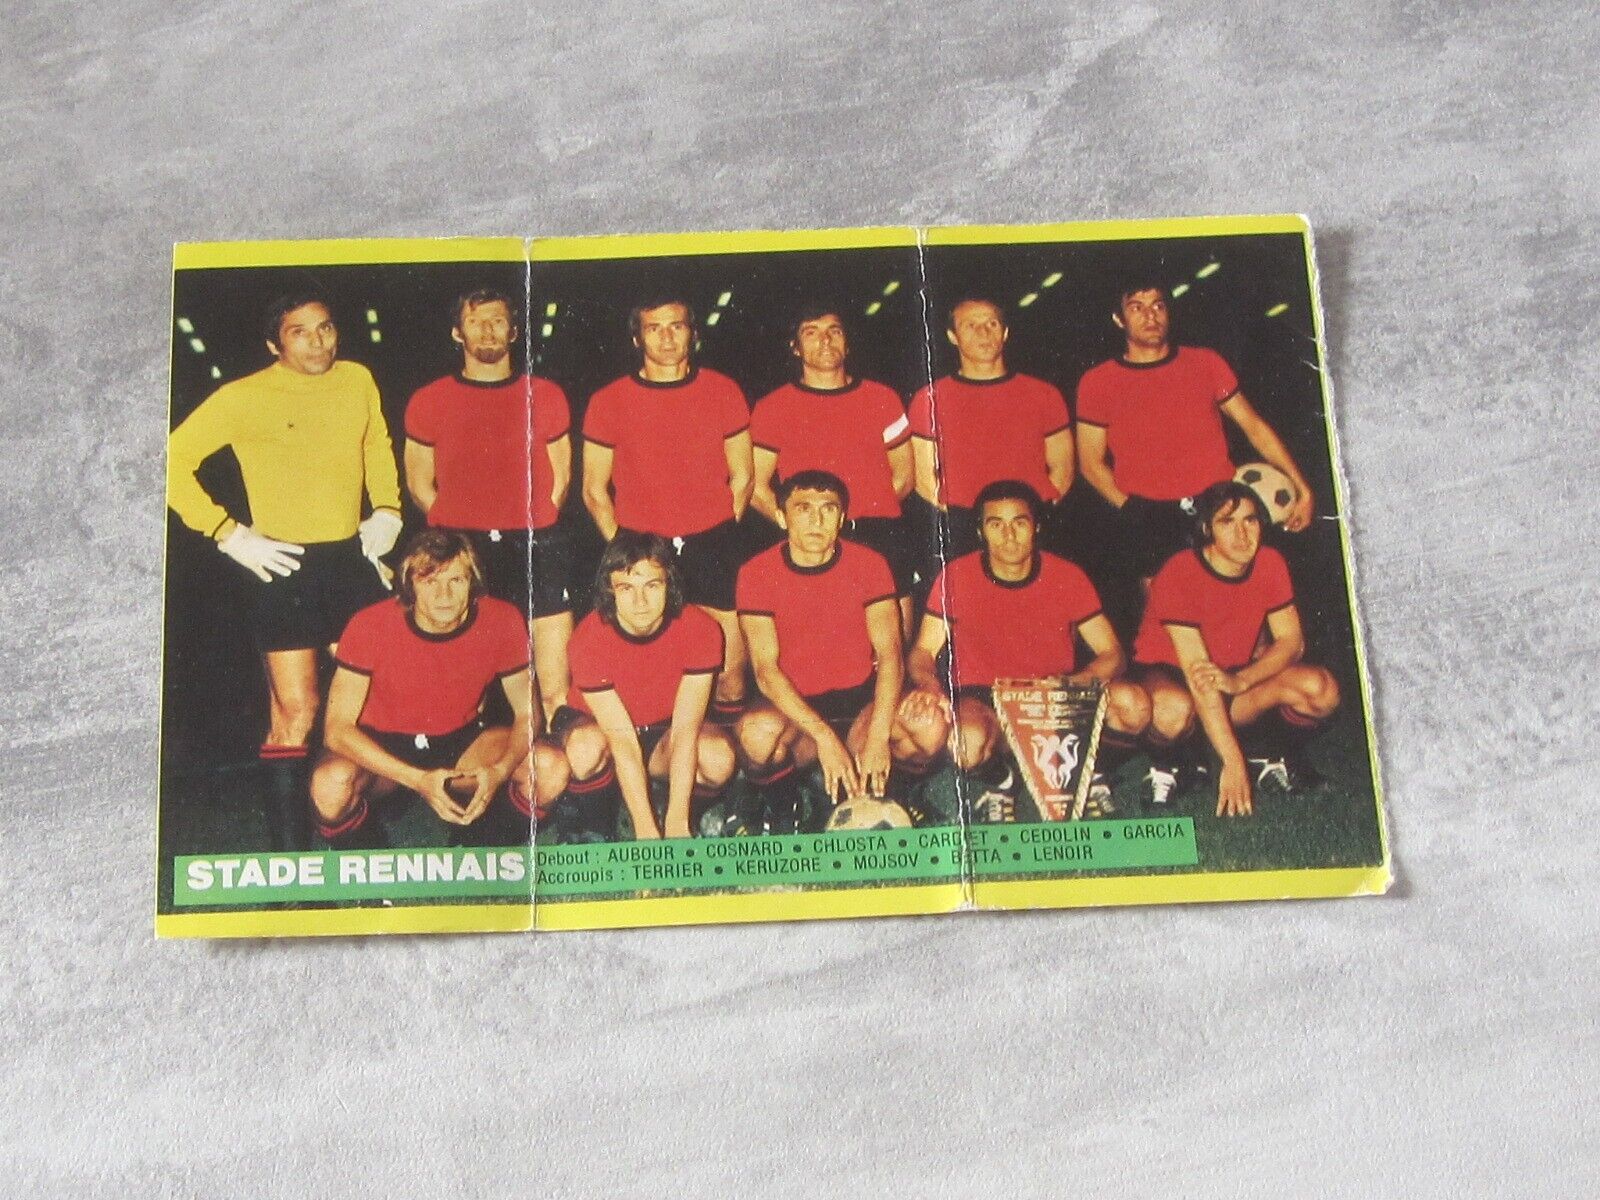 Stade Rennais team card - Rennes 1971-72 / Bel cheese factory